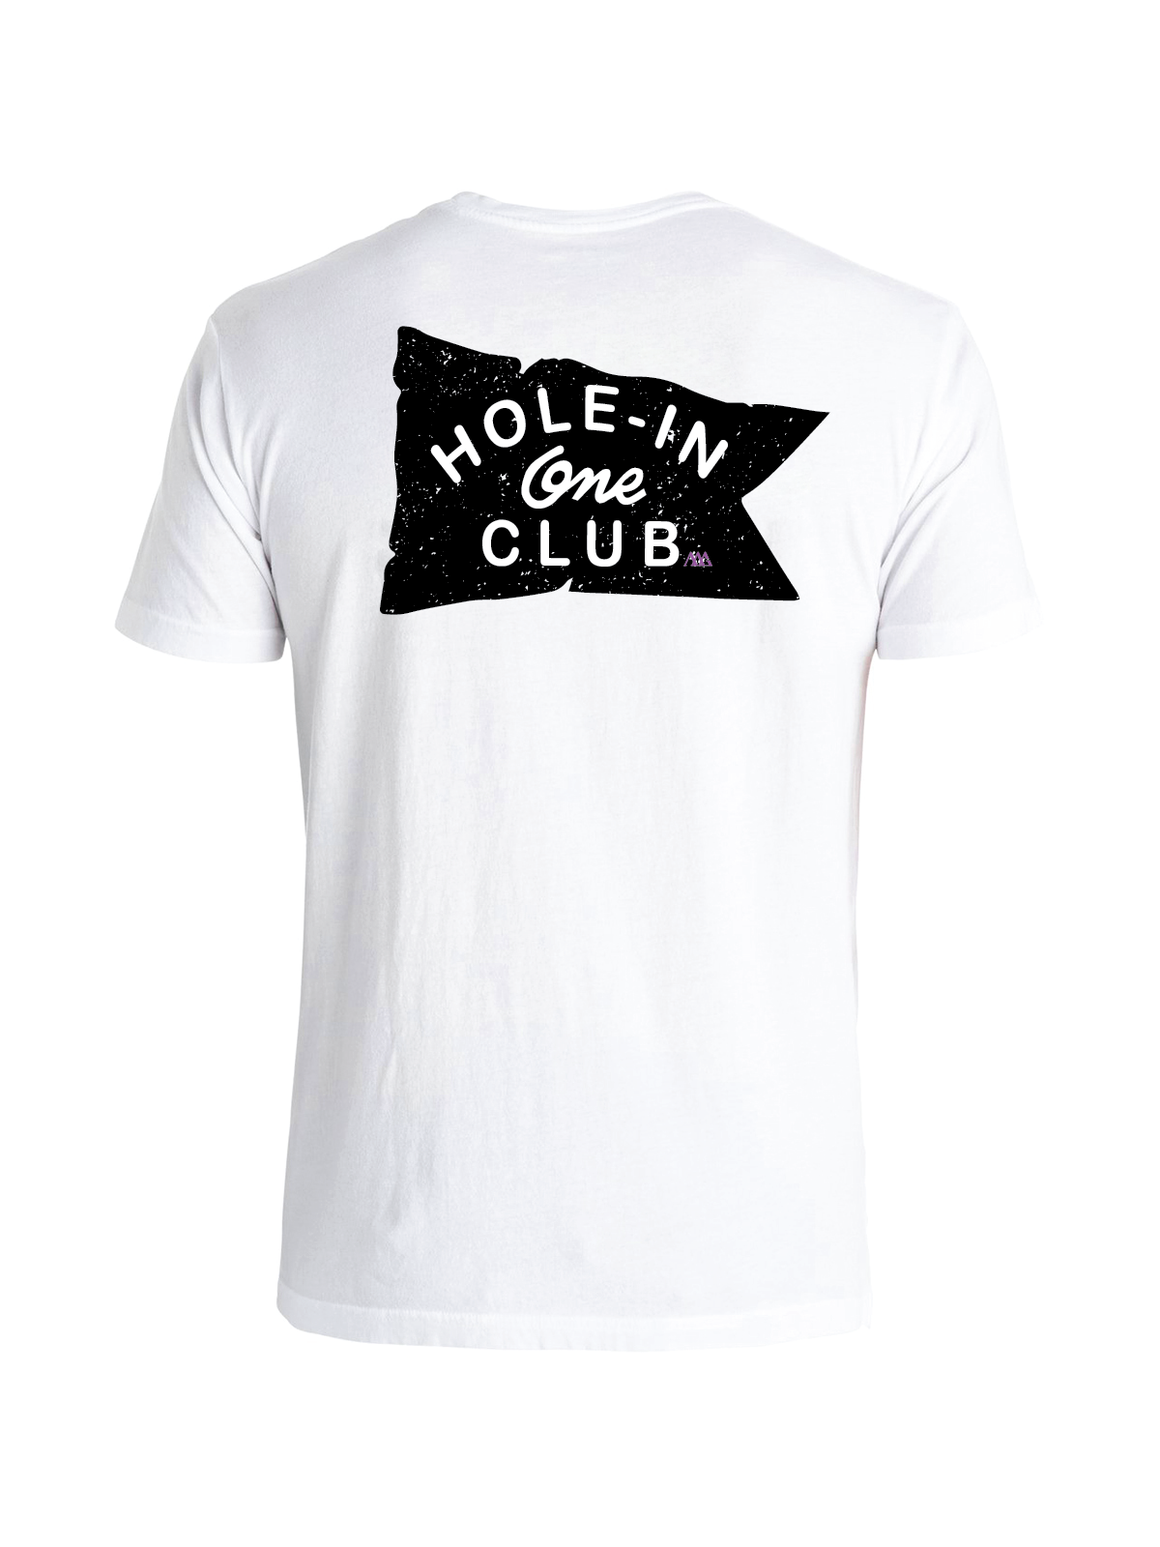 Hole-In-One Club Tee Shirt - White (Black / Iris)